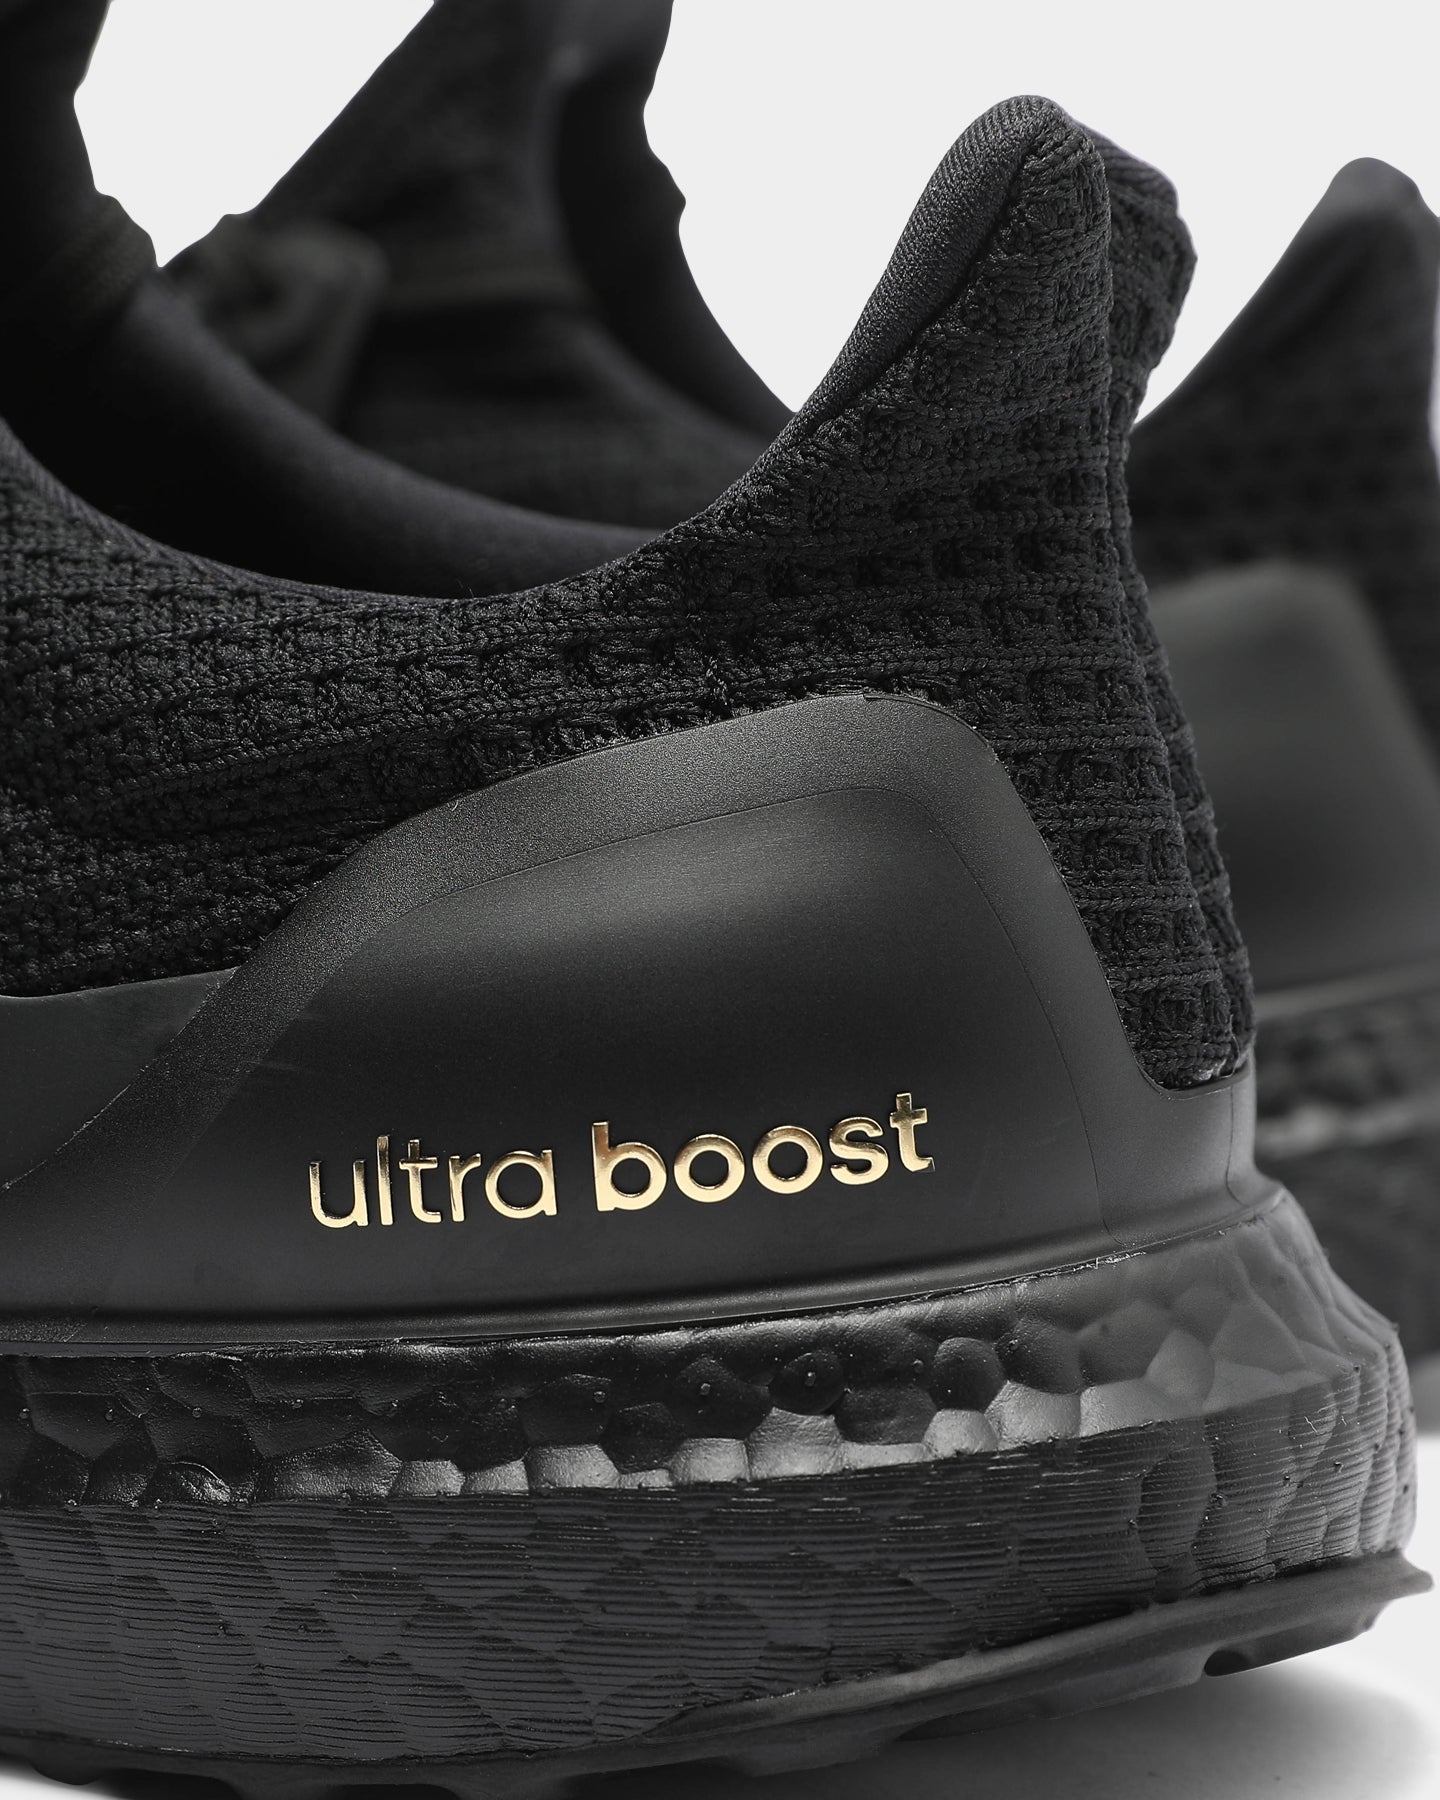 adidas ultra boost mens black on black